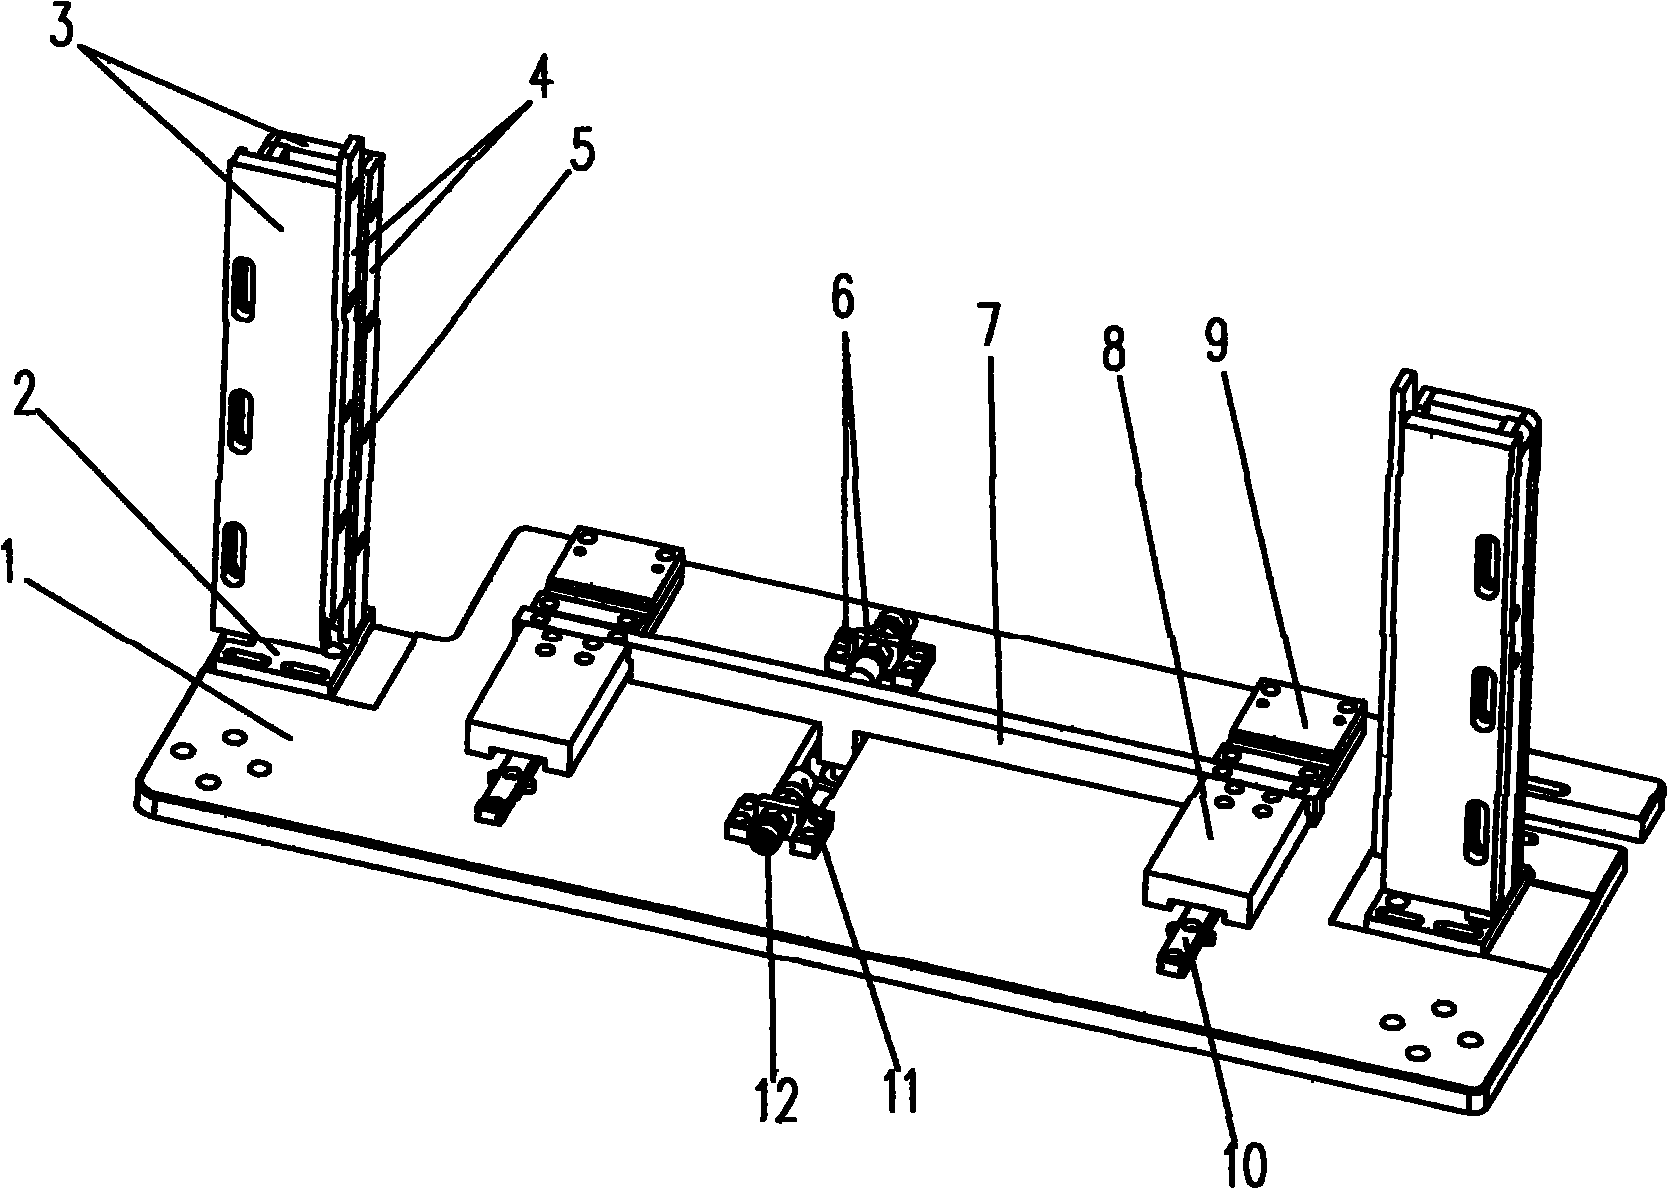 Ejector sleeve device mechanism